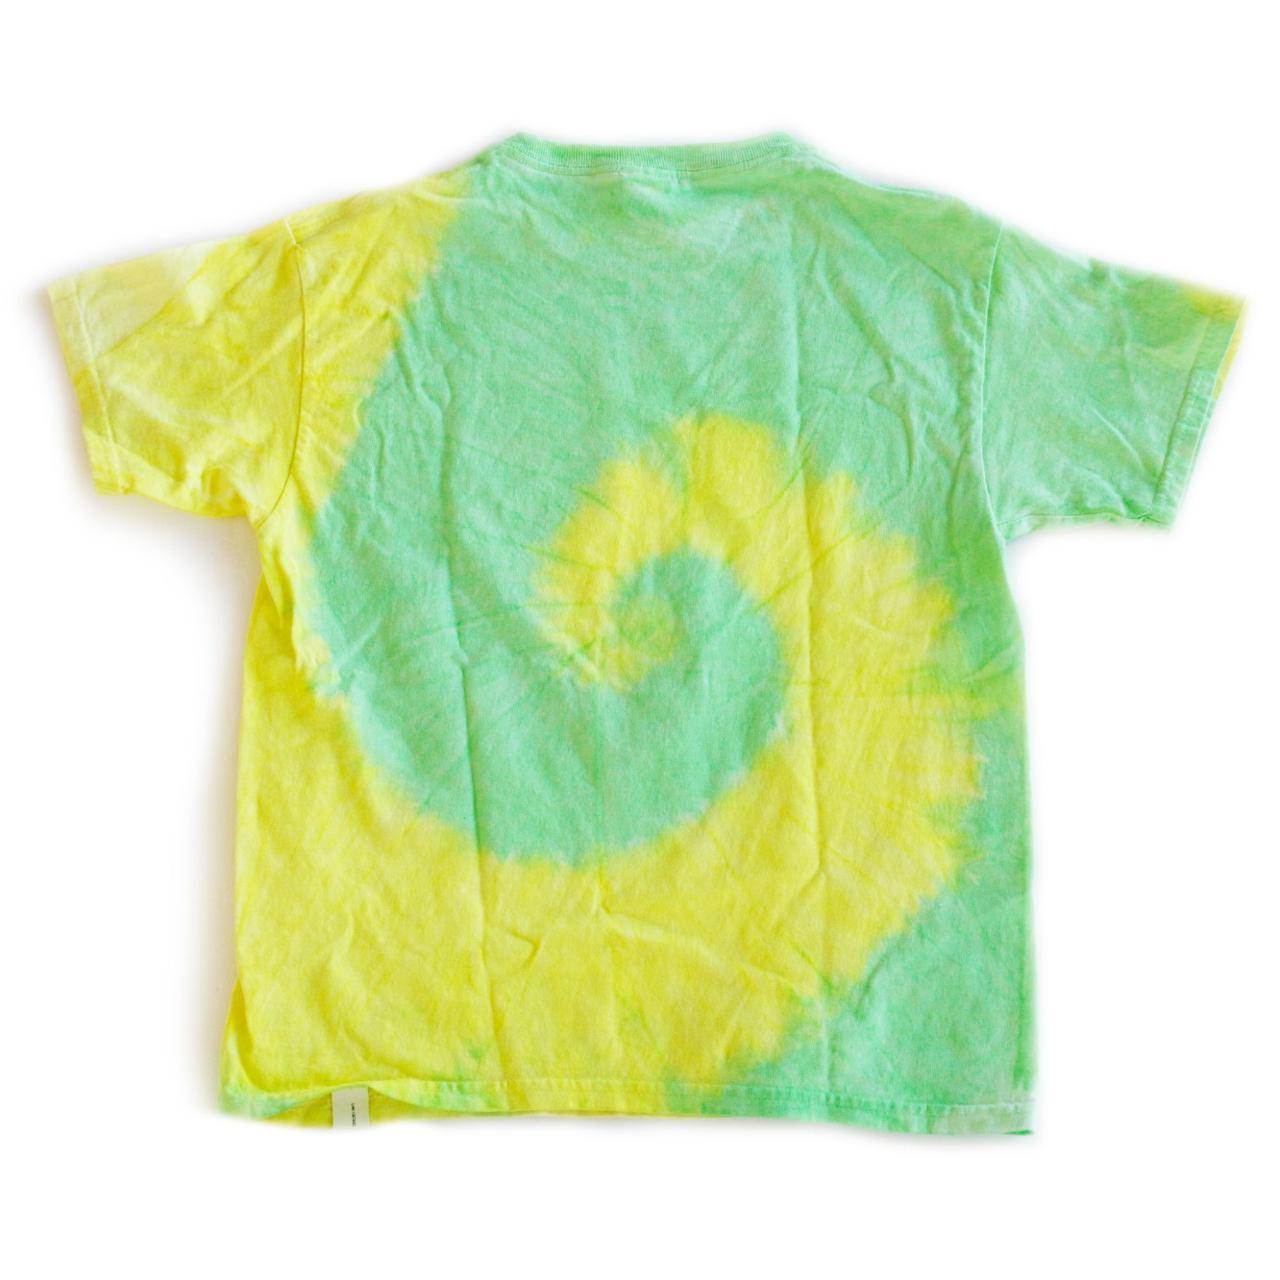 Gildan Women's Green and Yellow T-shirt (2)